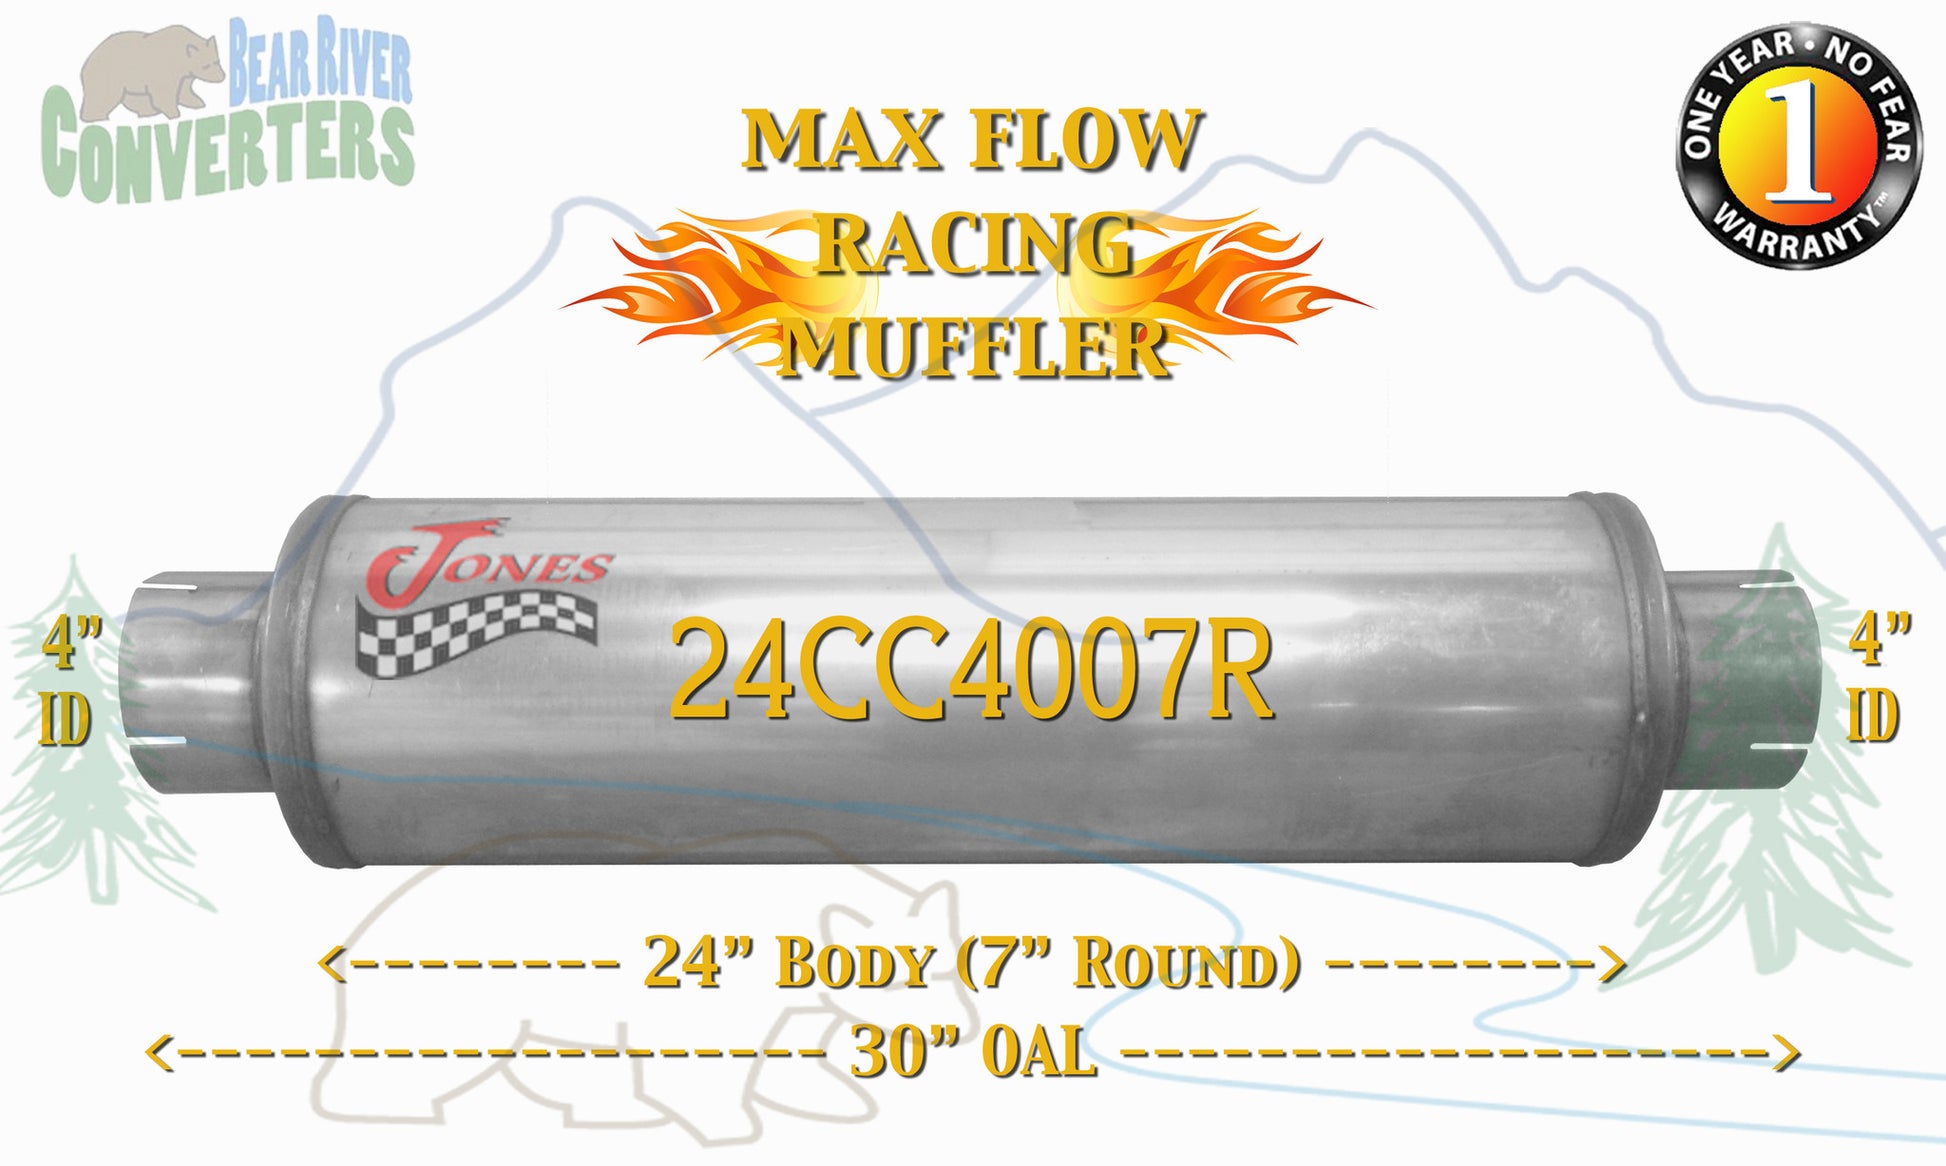 24CC4007R Jones JXS2772 Max Flow Racing Muffler 24” Round Body 4” Pipe Center/Center 30” OAL - Bear River Converters